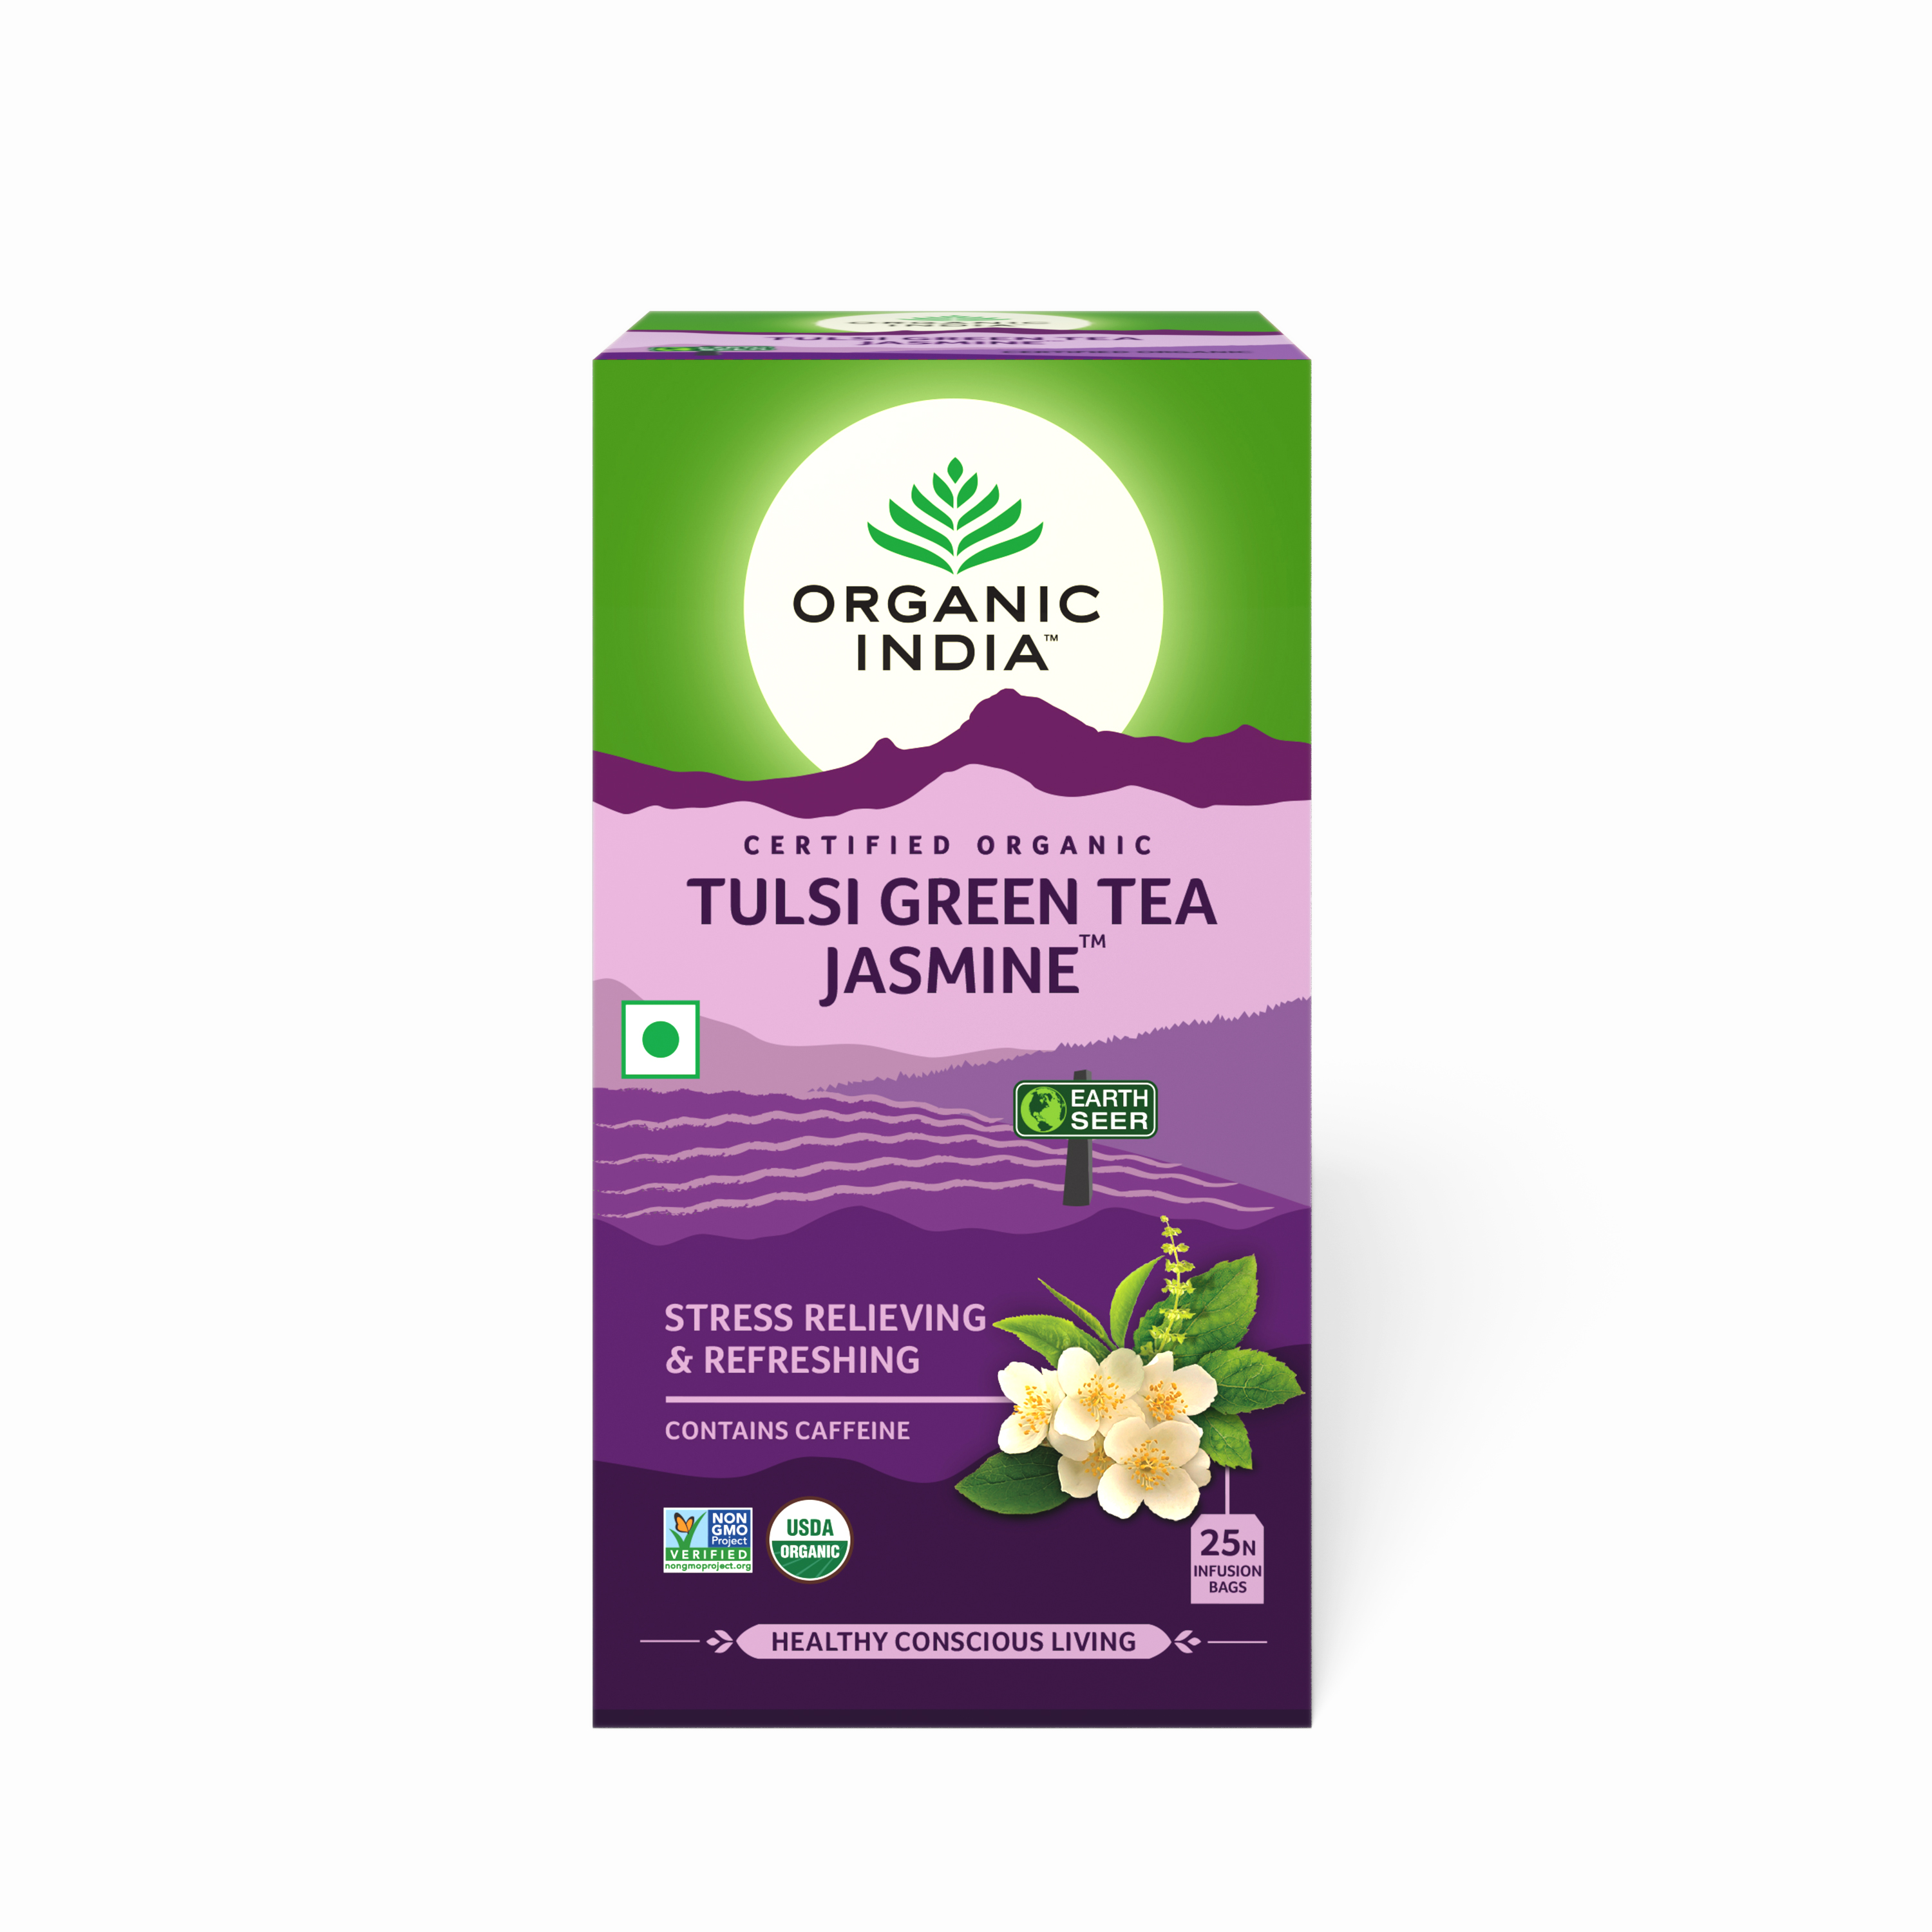 Buy Organic India Tulsi Green Tea Jasmine at Best Price Online